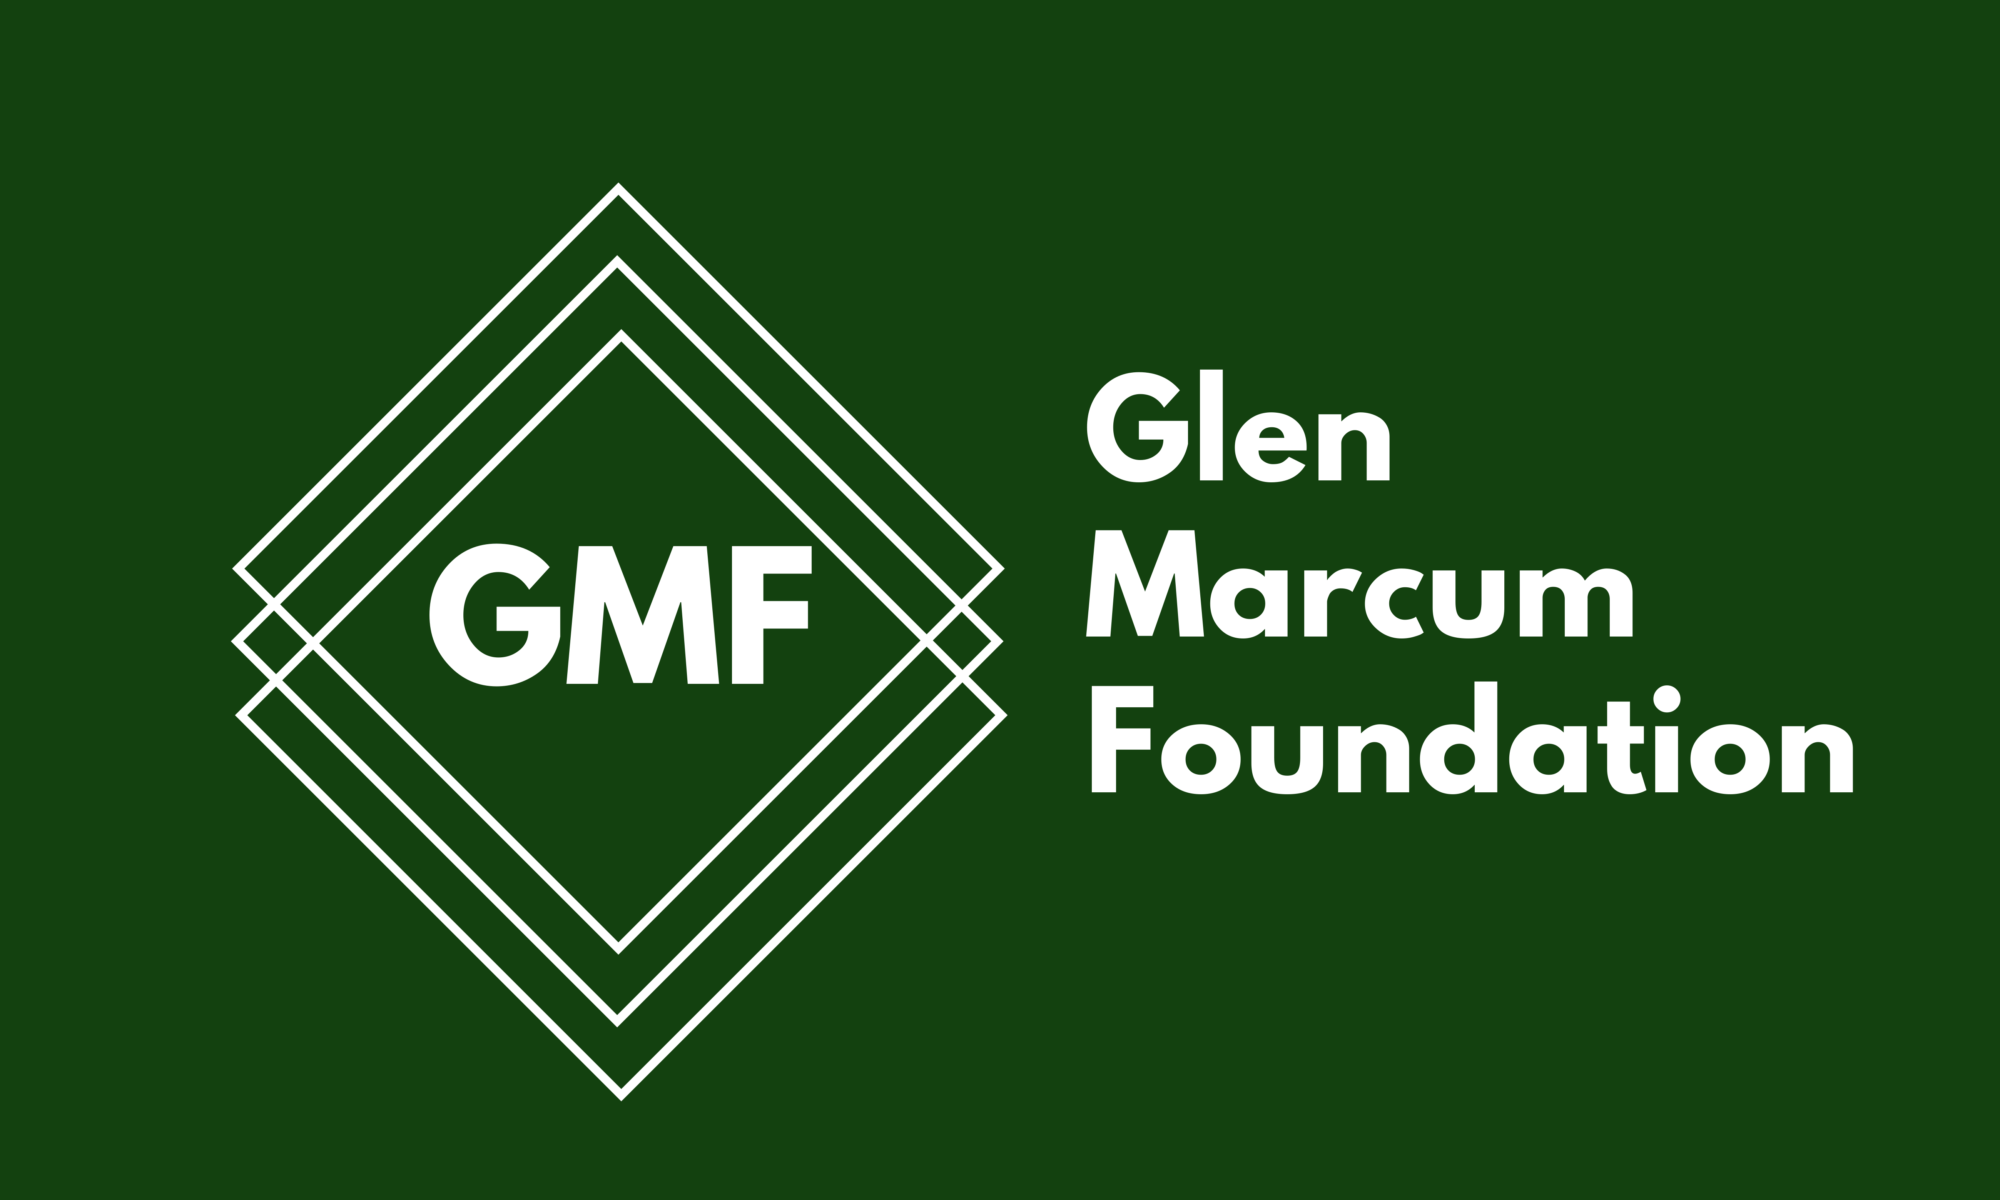 The Glen Marcum Foundation